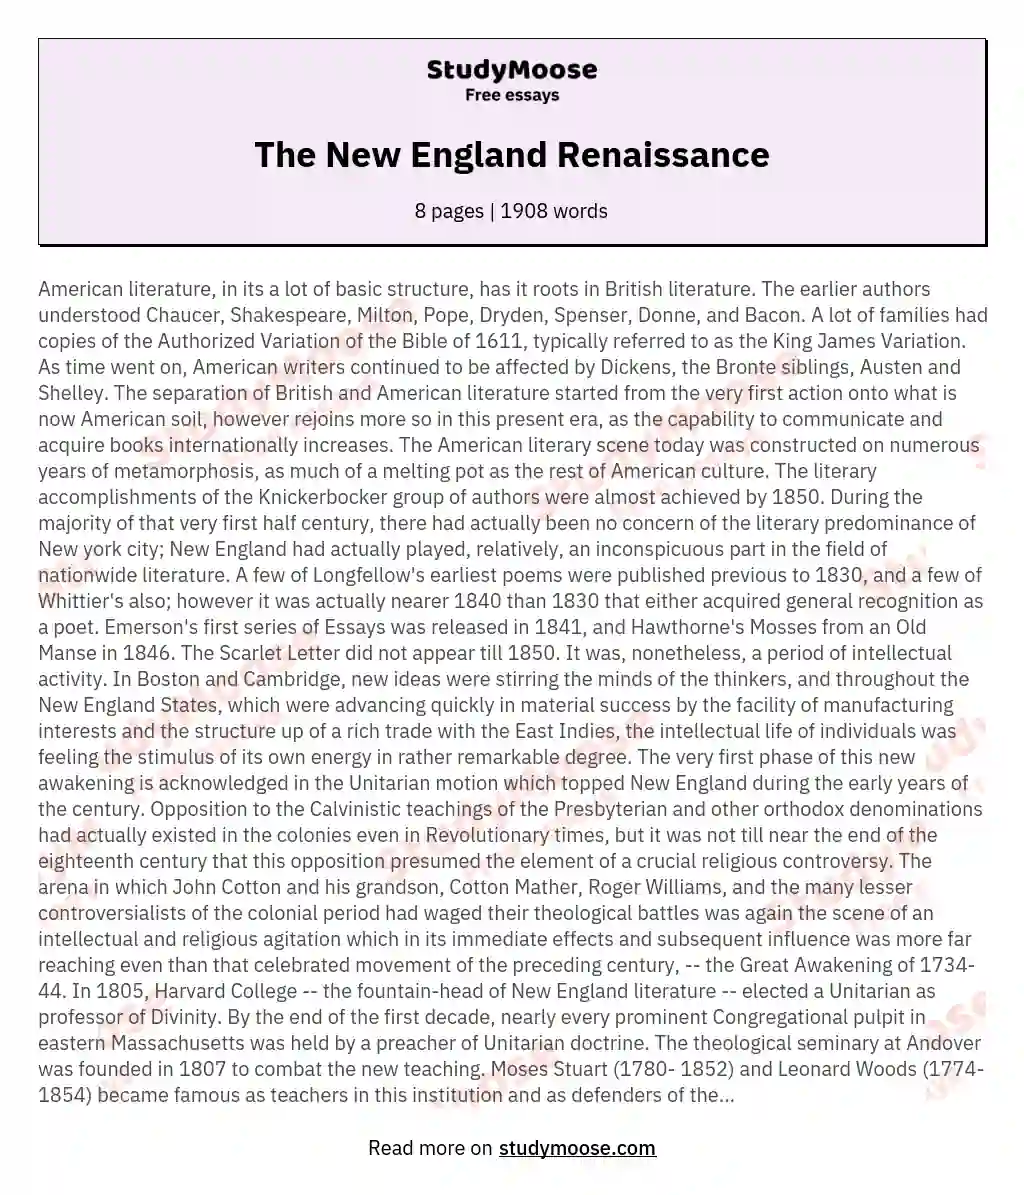 The New England Renaissance essay